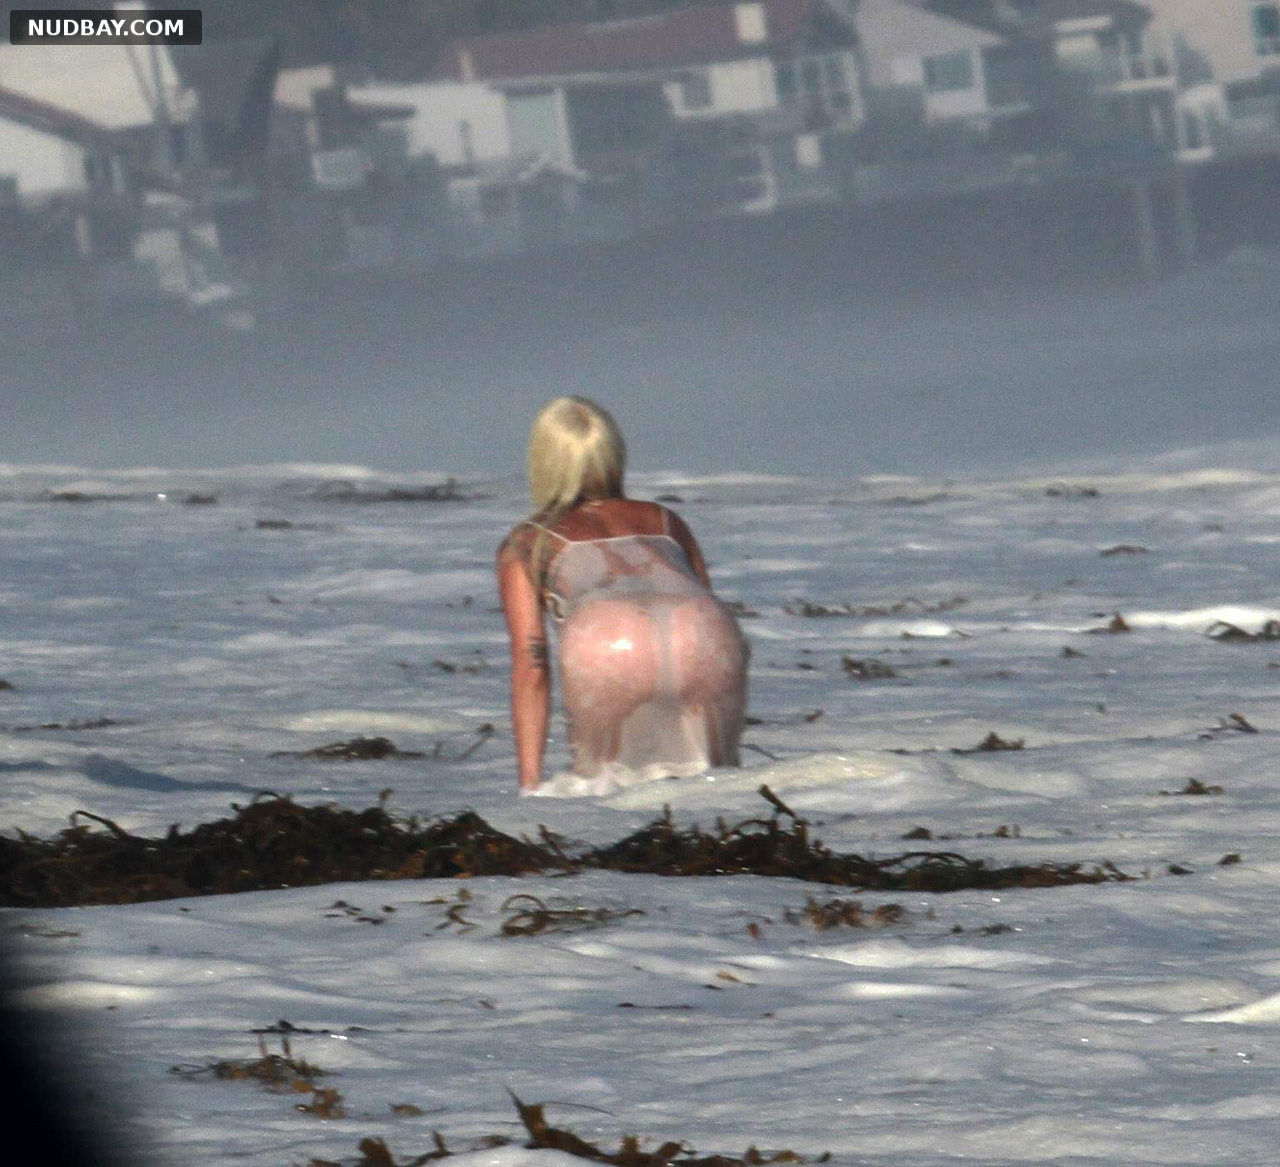 Lady Gaga nude photoshoot on the beach in Malibu July 25 2018